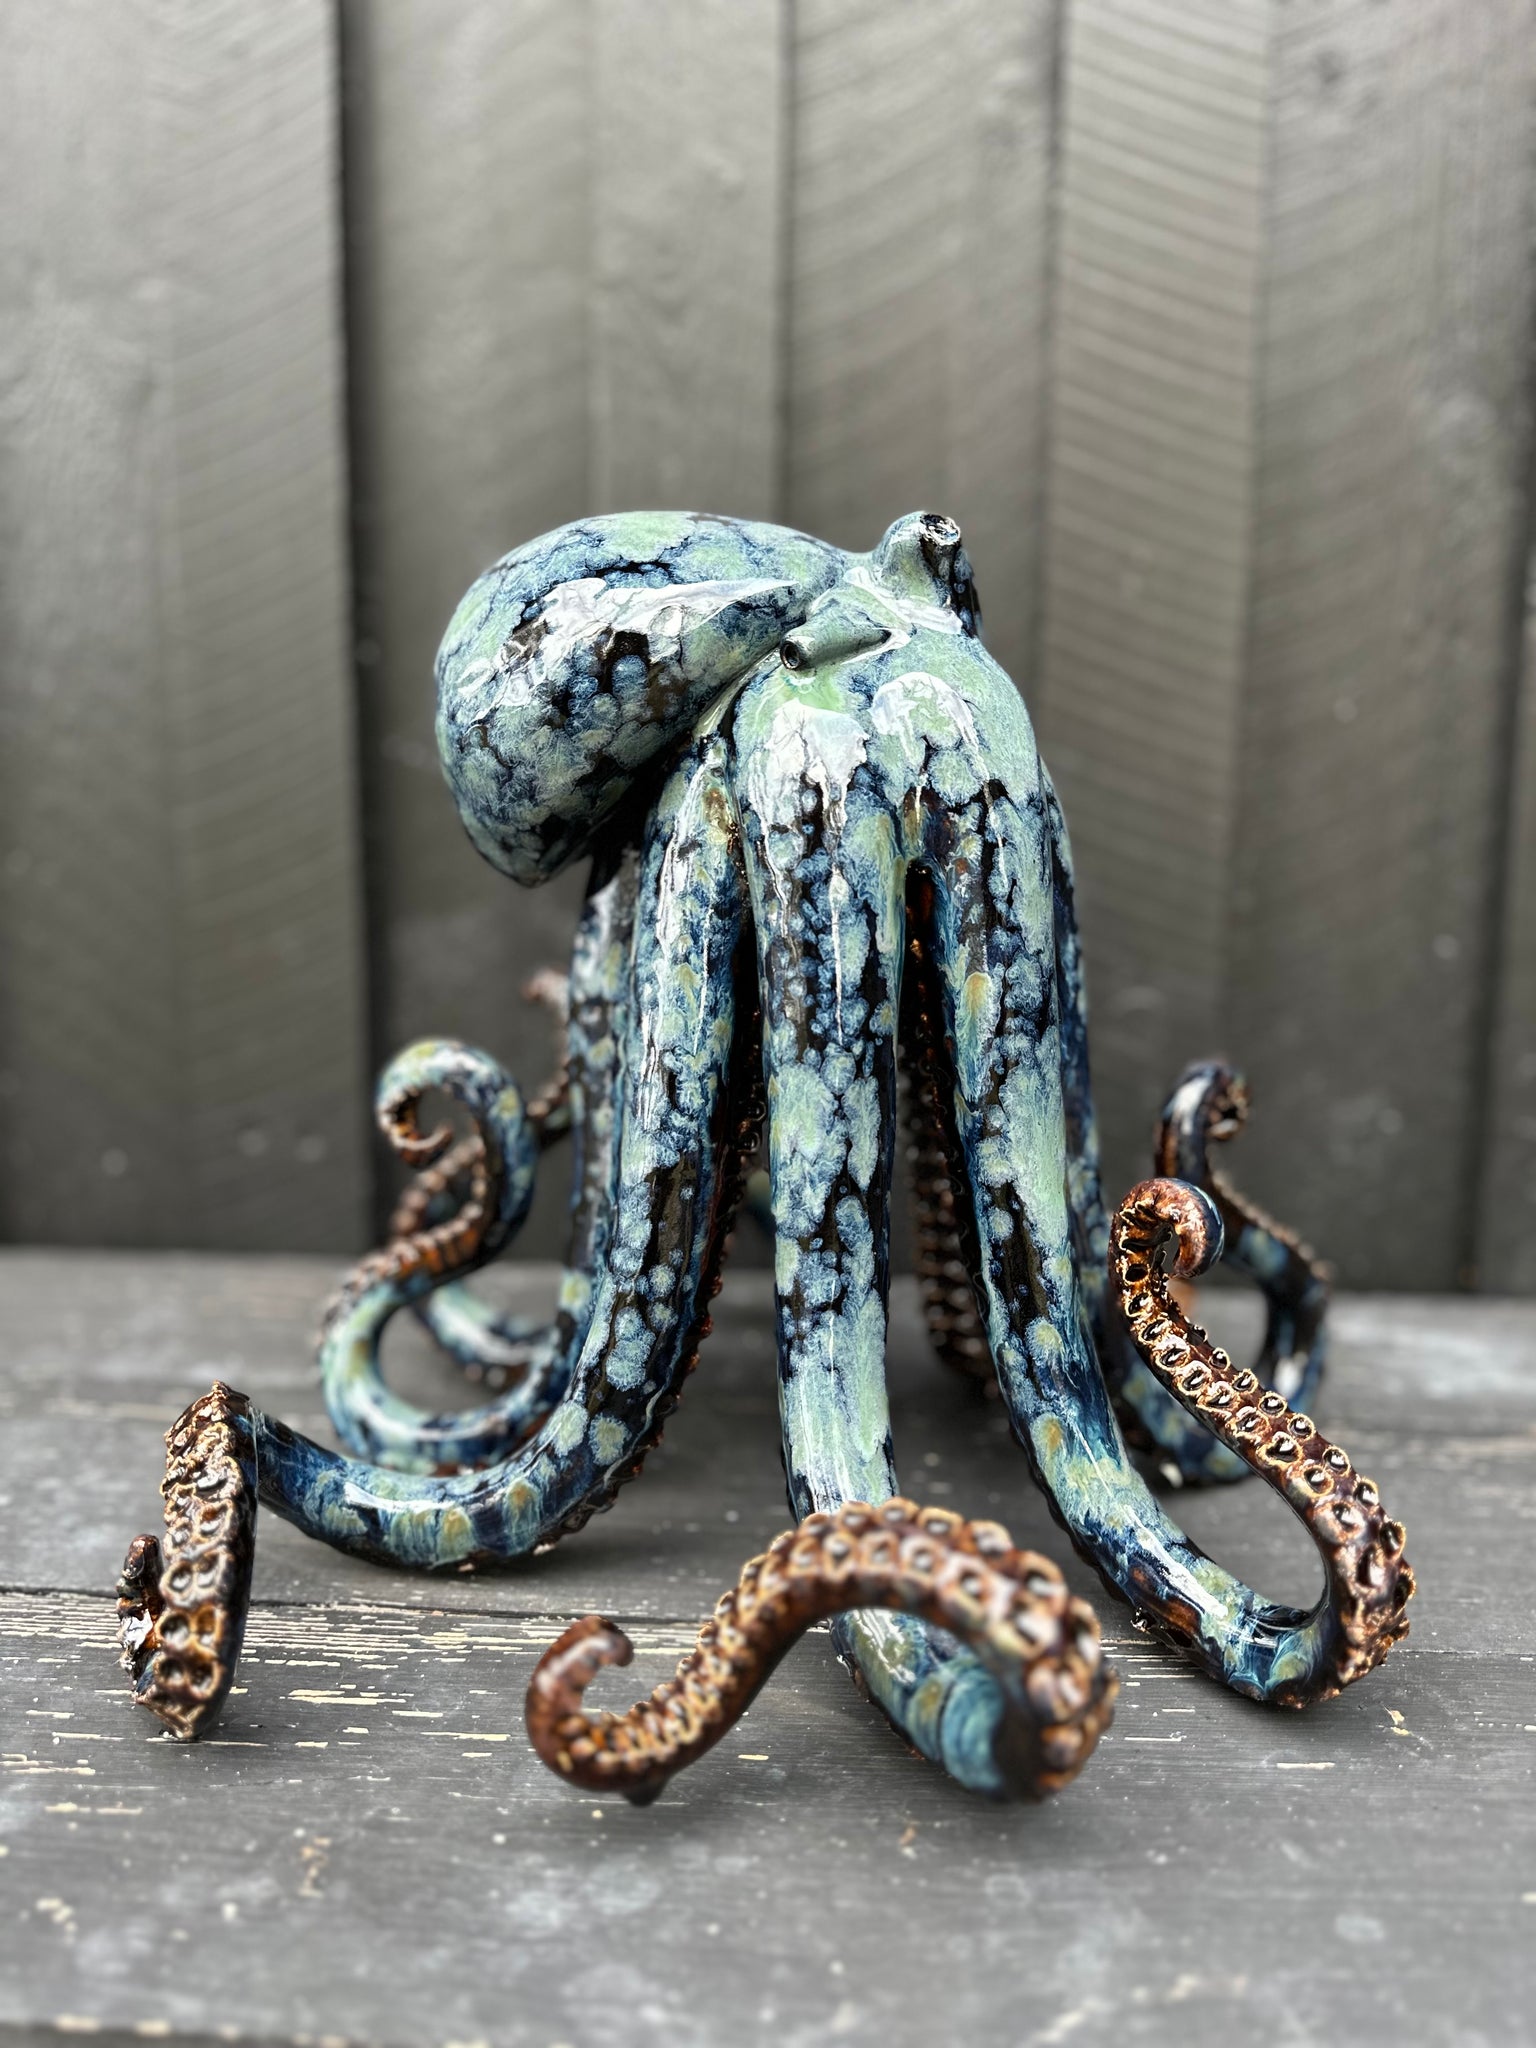 Green/brown/blue squid